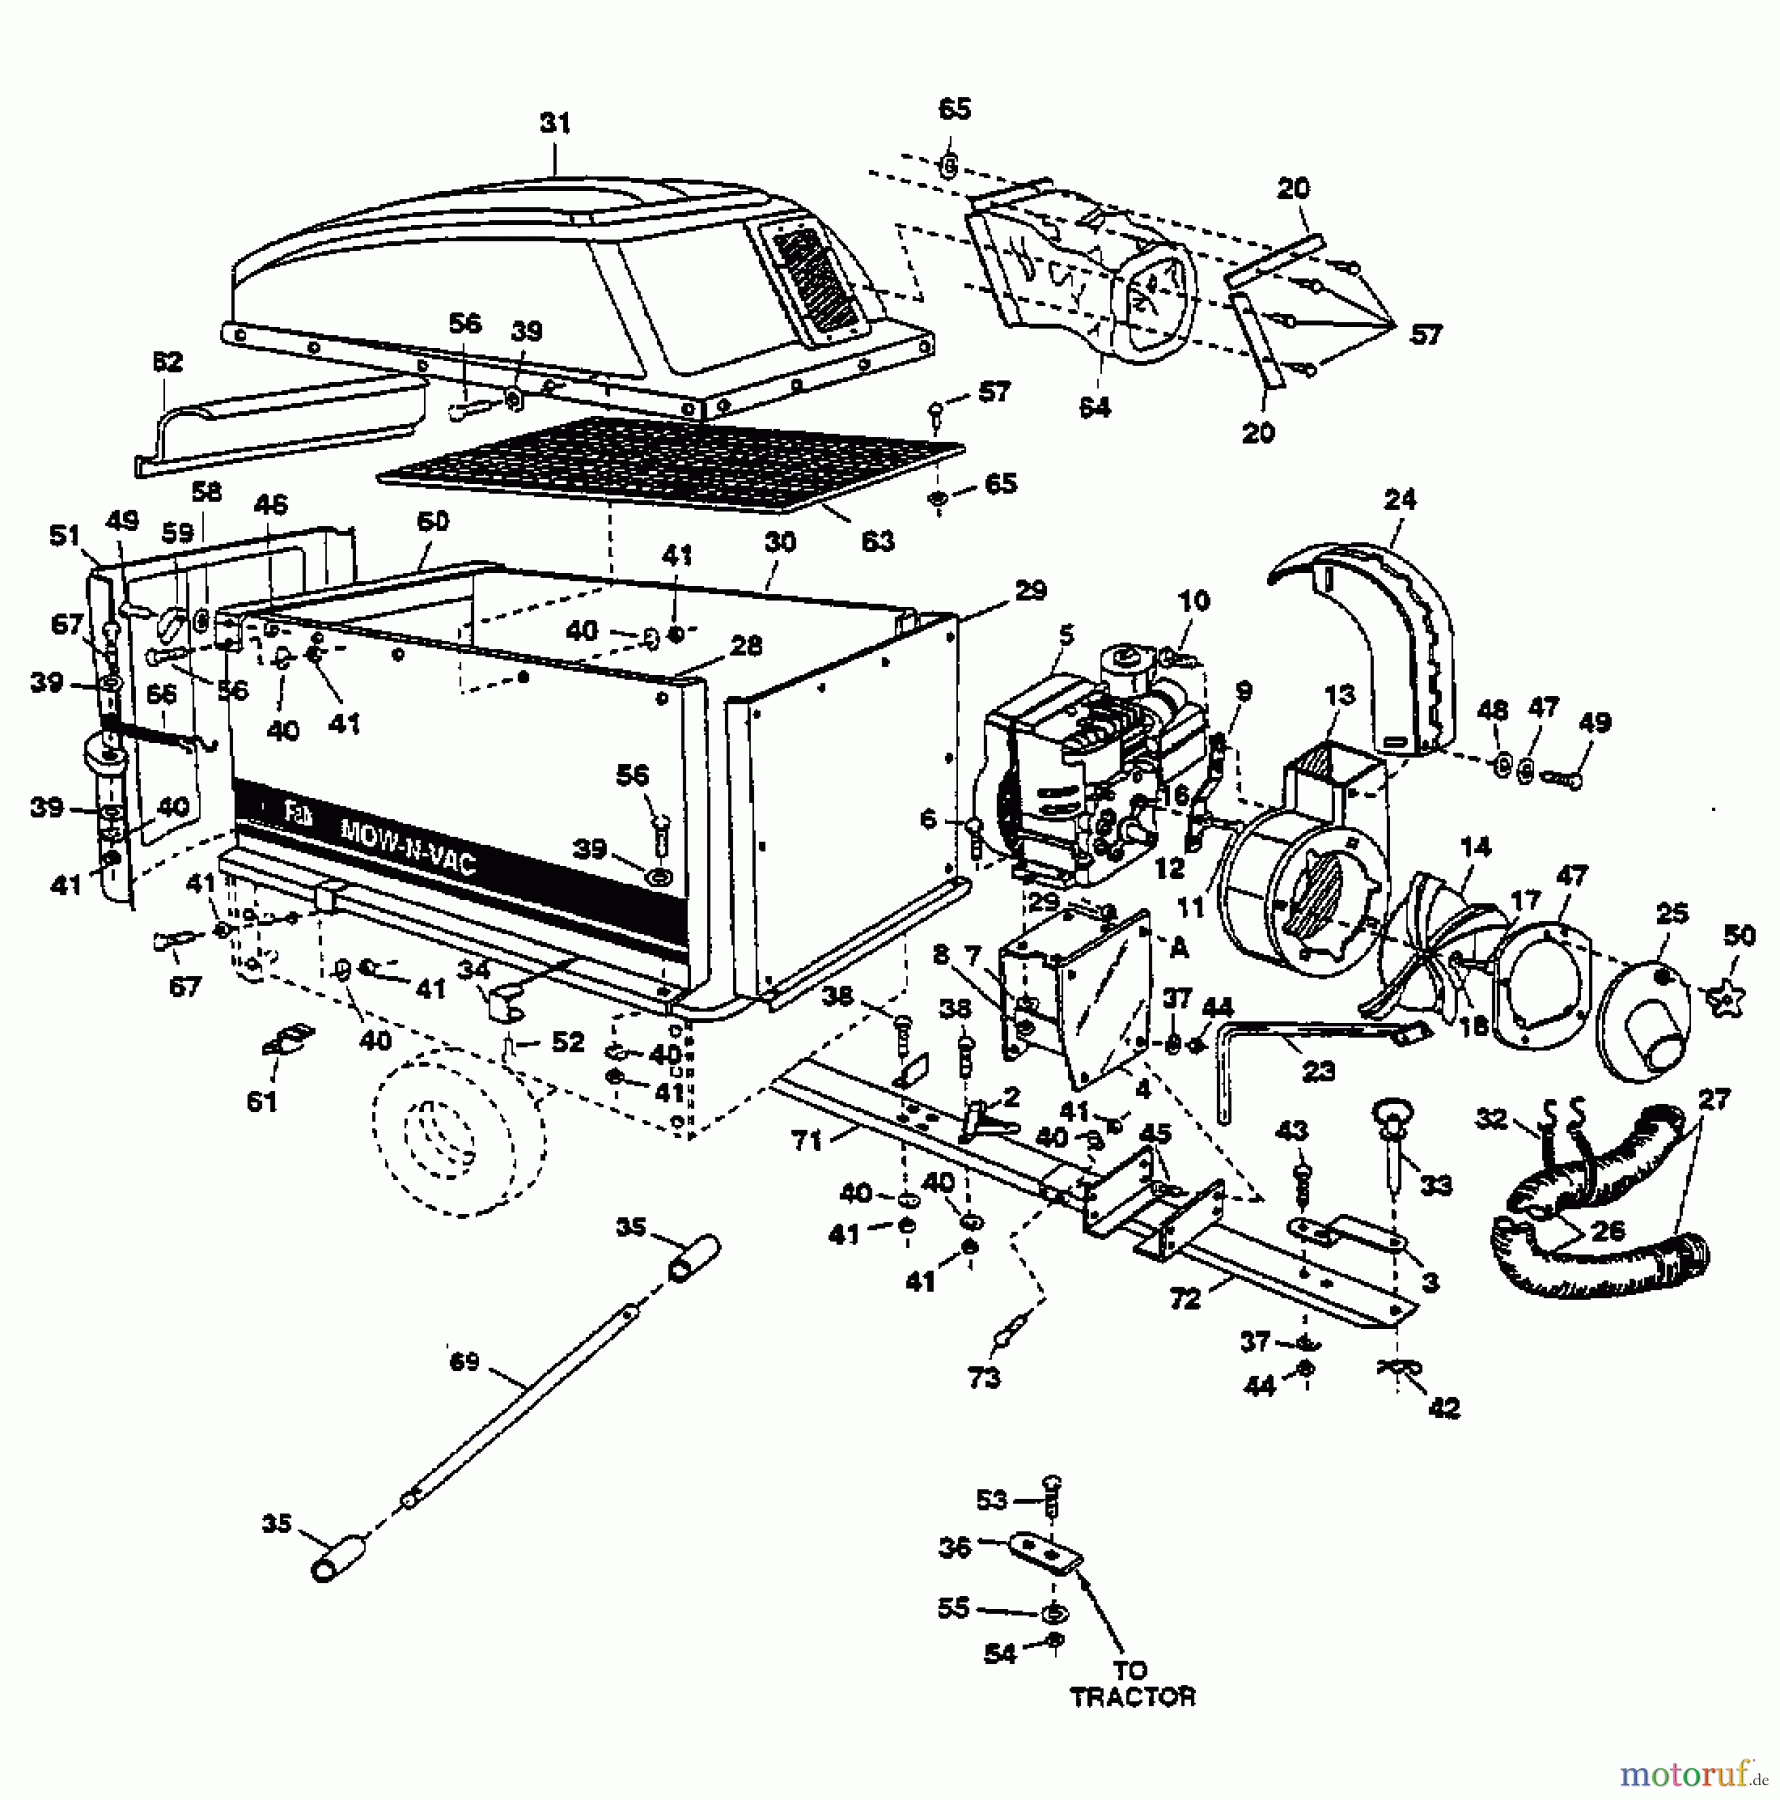  MTD Accessories Accessories garden and lawn tractors Blower Mow-Vac 45-01884  (1999) Basic machine